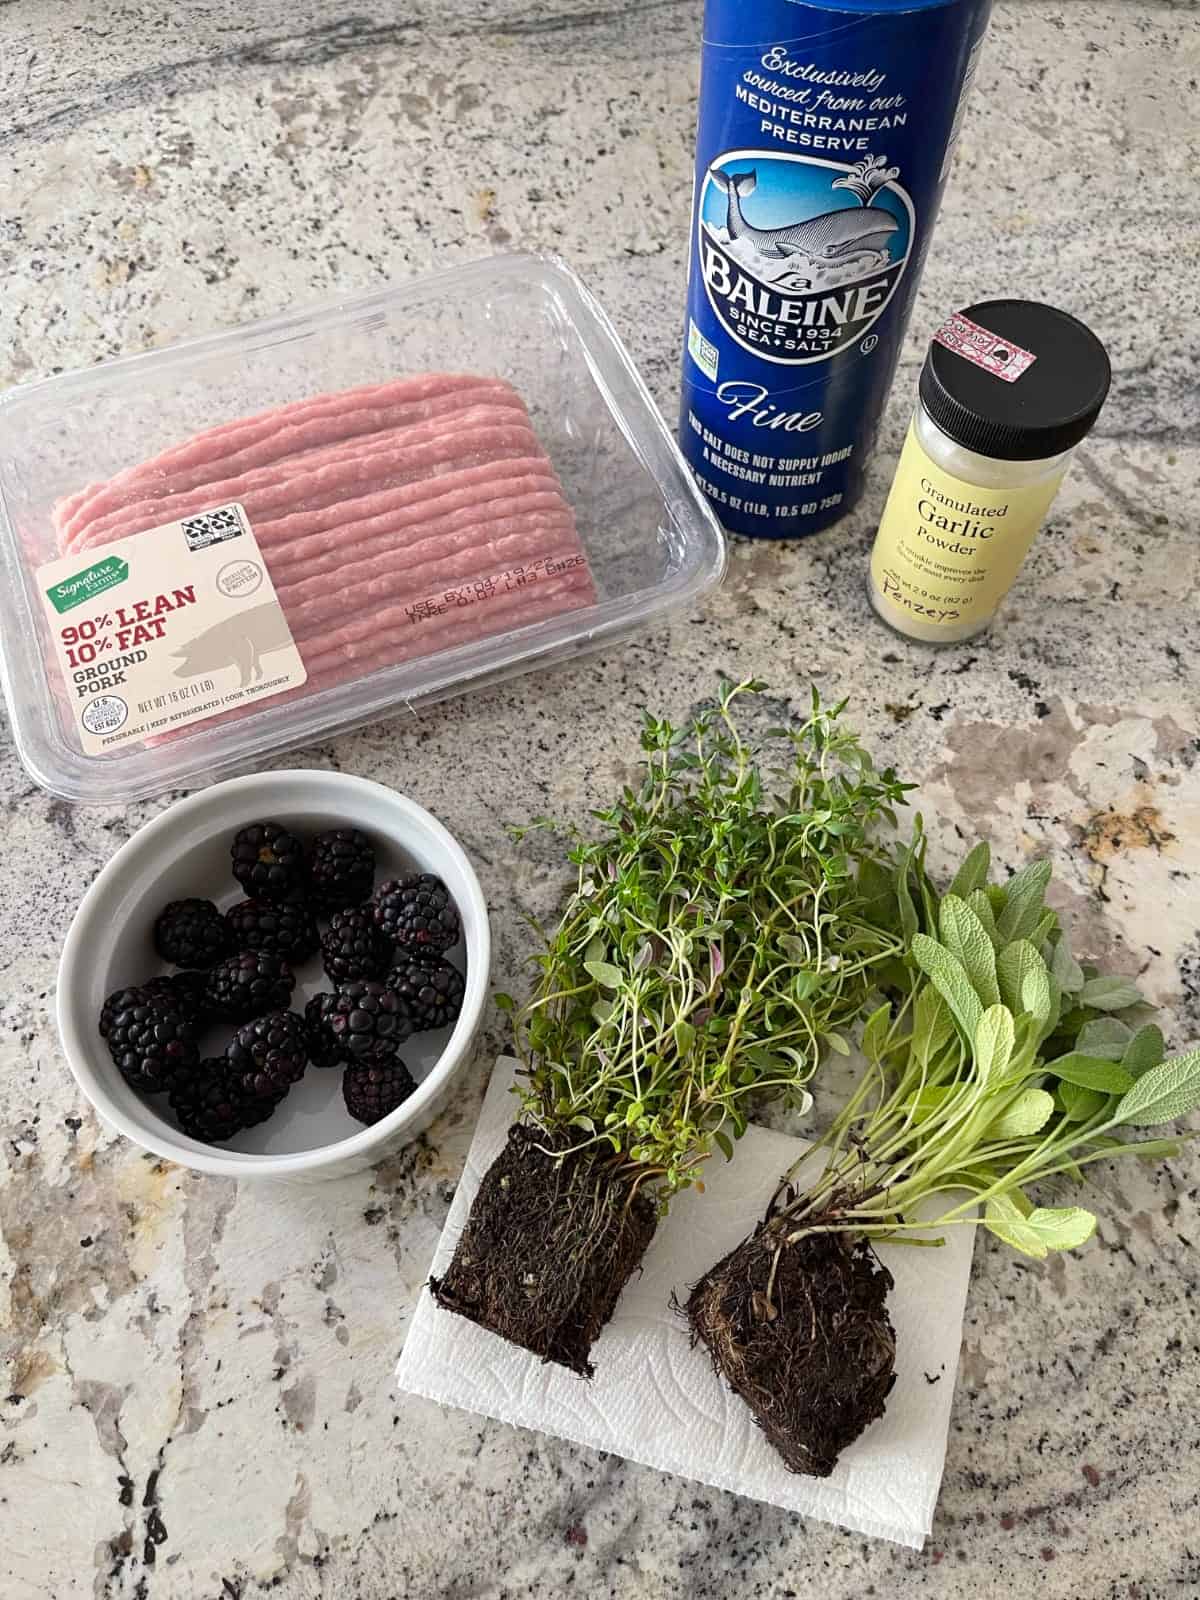 Ingredients including ground pork, blackberries, sage, thyme, garlic powder and sea salt.